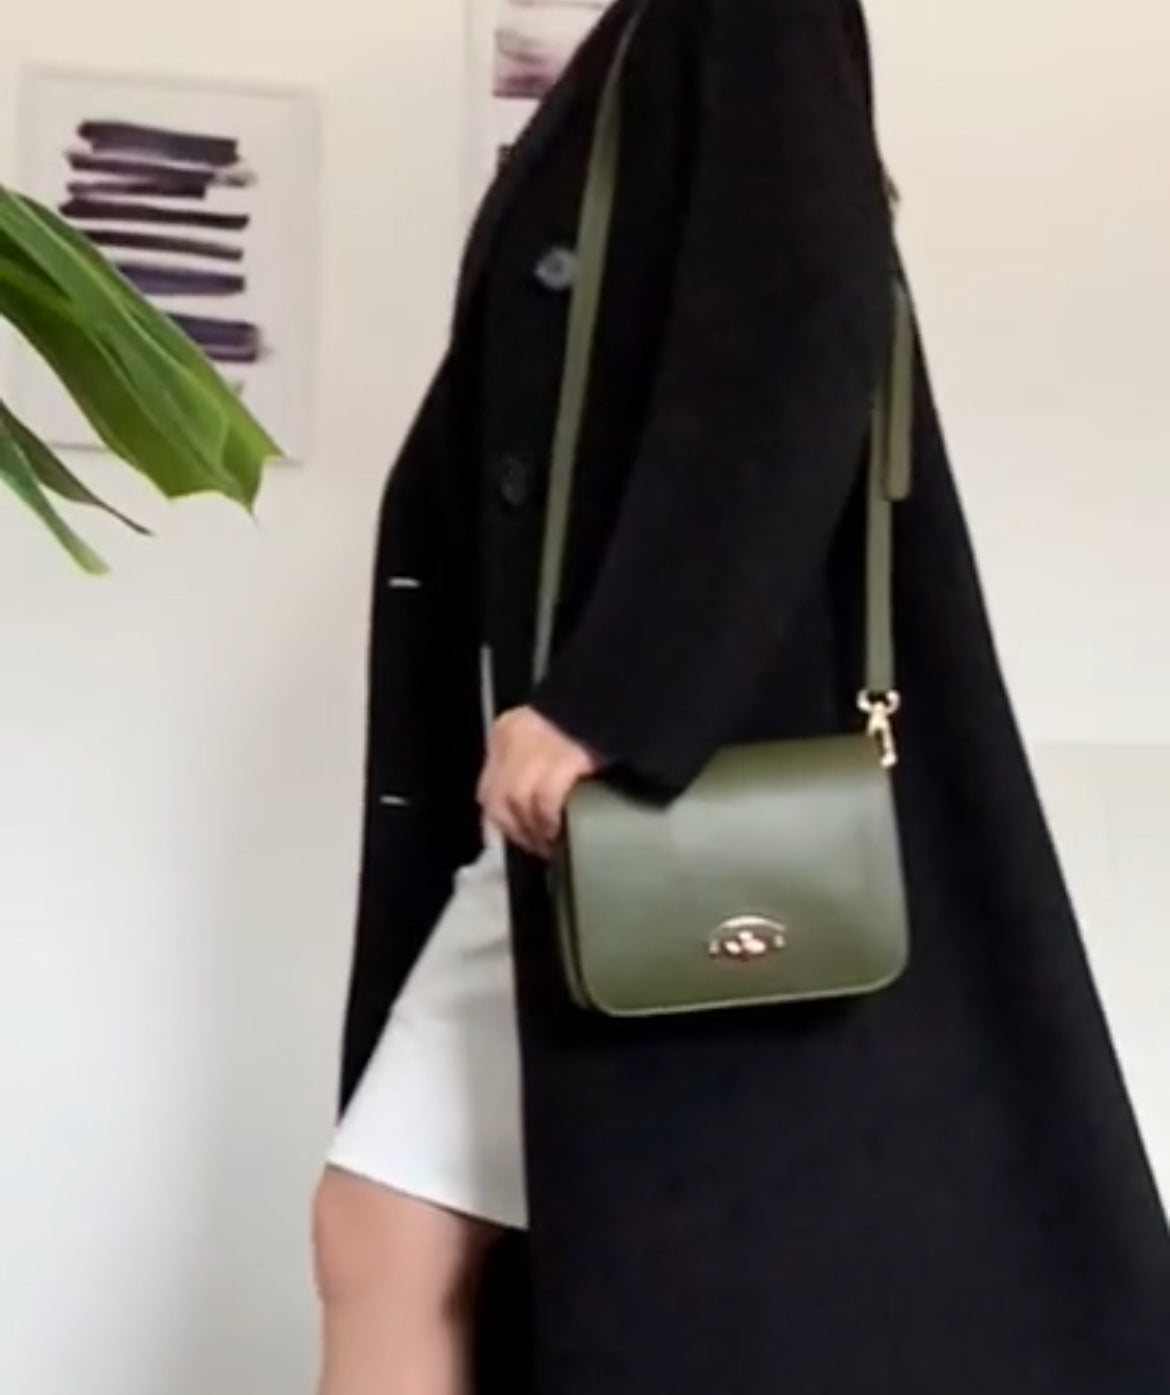 Palermo Leather Bag | Tan